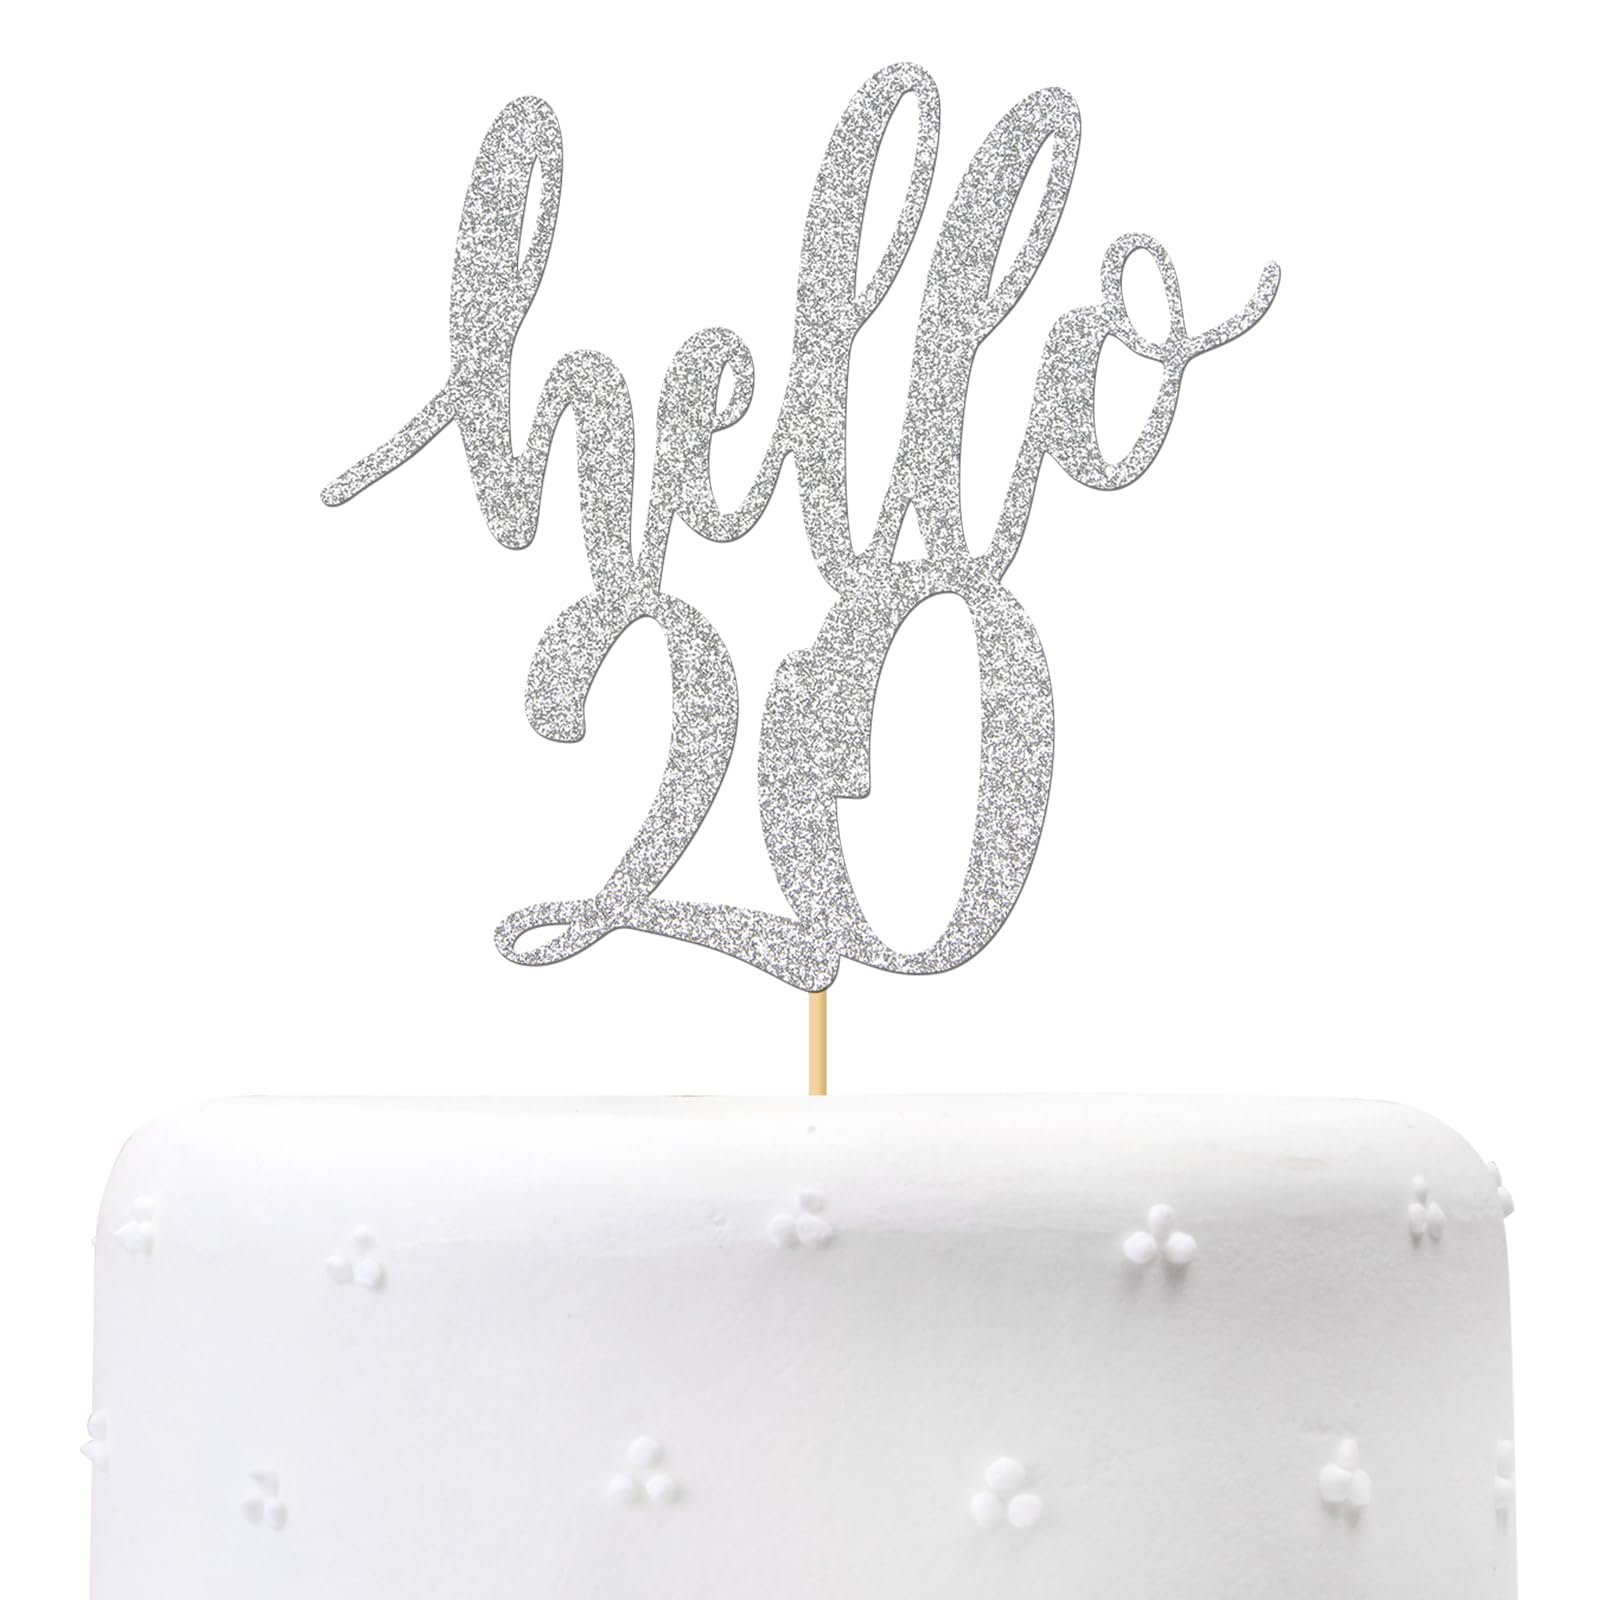 Selanka Cakes - 20th birthday cake for a girl | Facebook